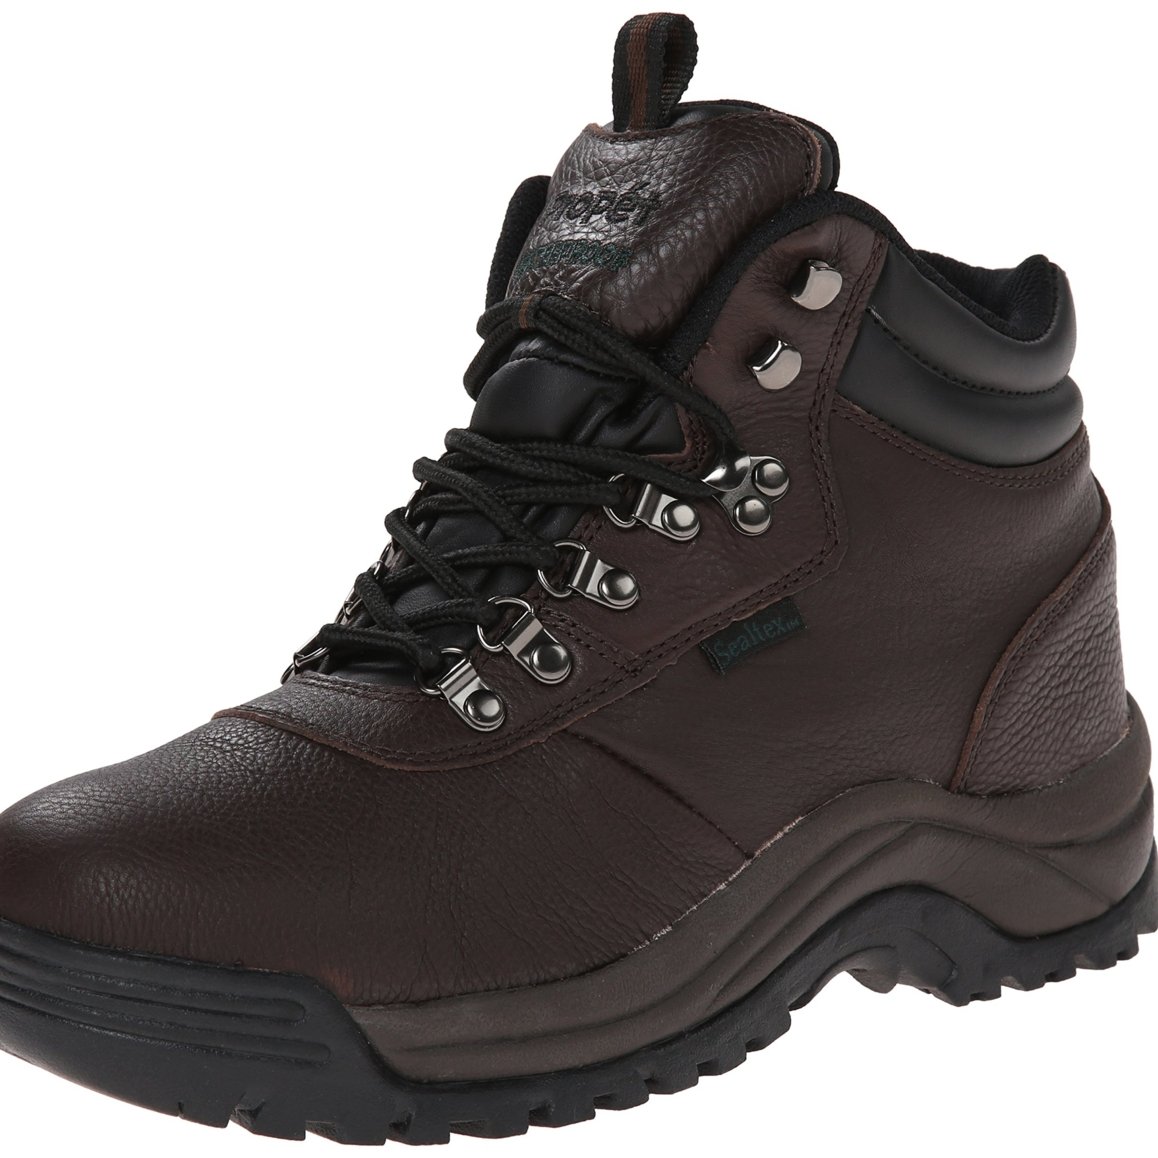 Propet Men's Cliff Walker Hiking Boot Bronco Brown - M3188BRO - BRONCO BROWN, 9-2E